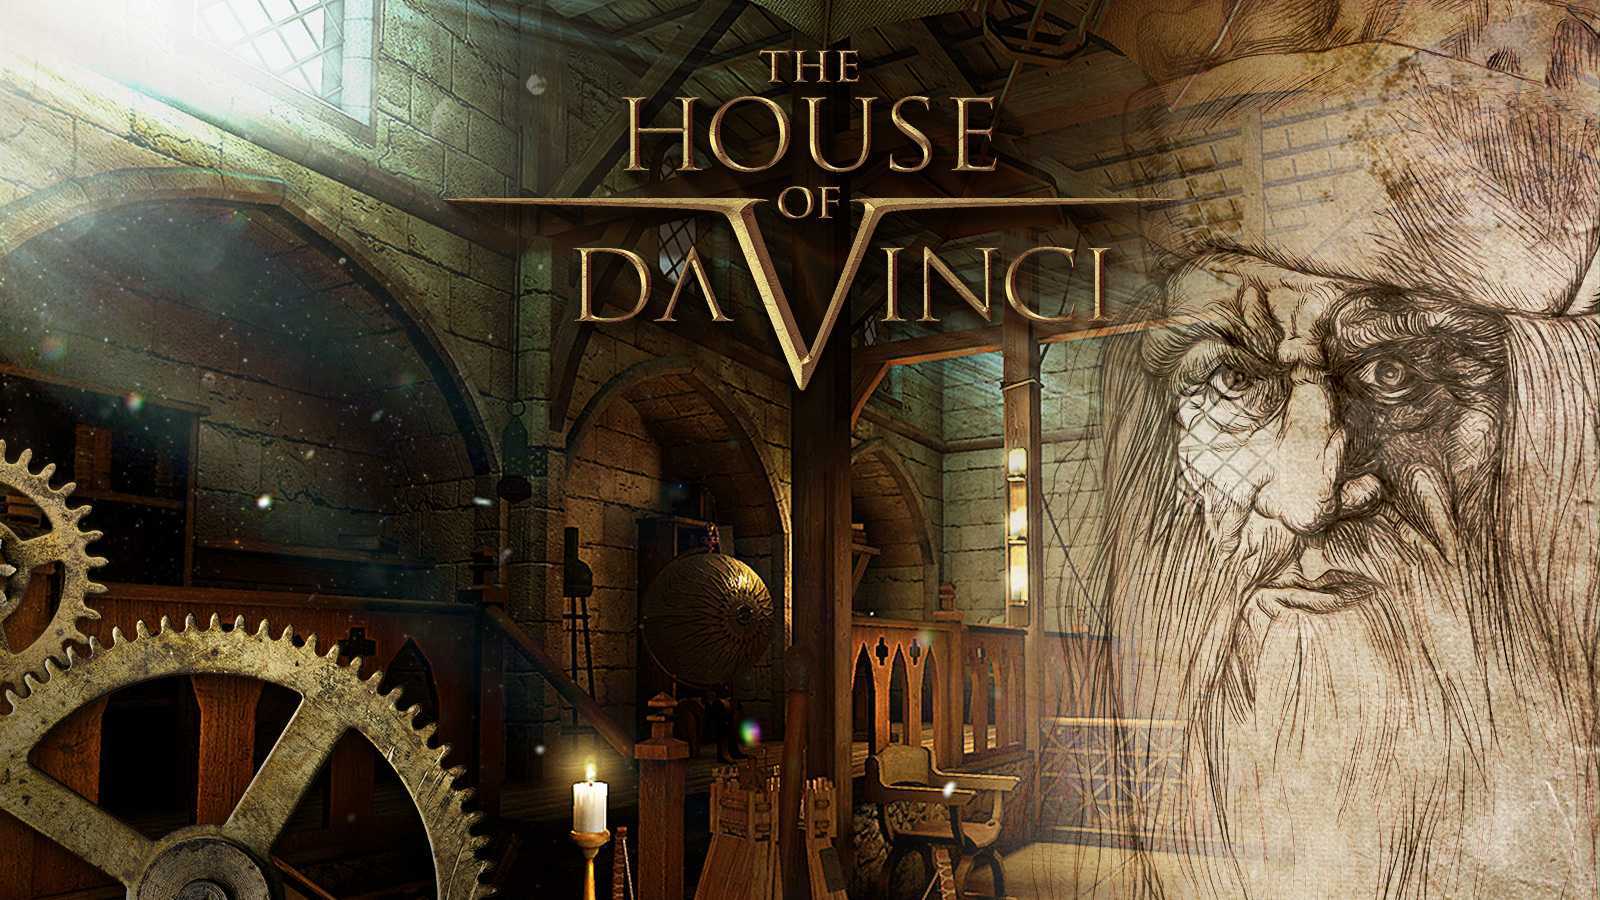 House of da vinci, the